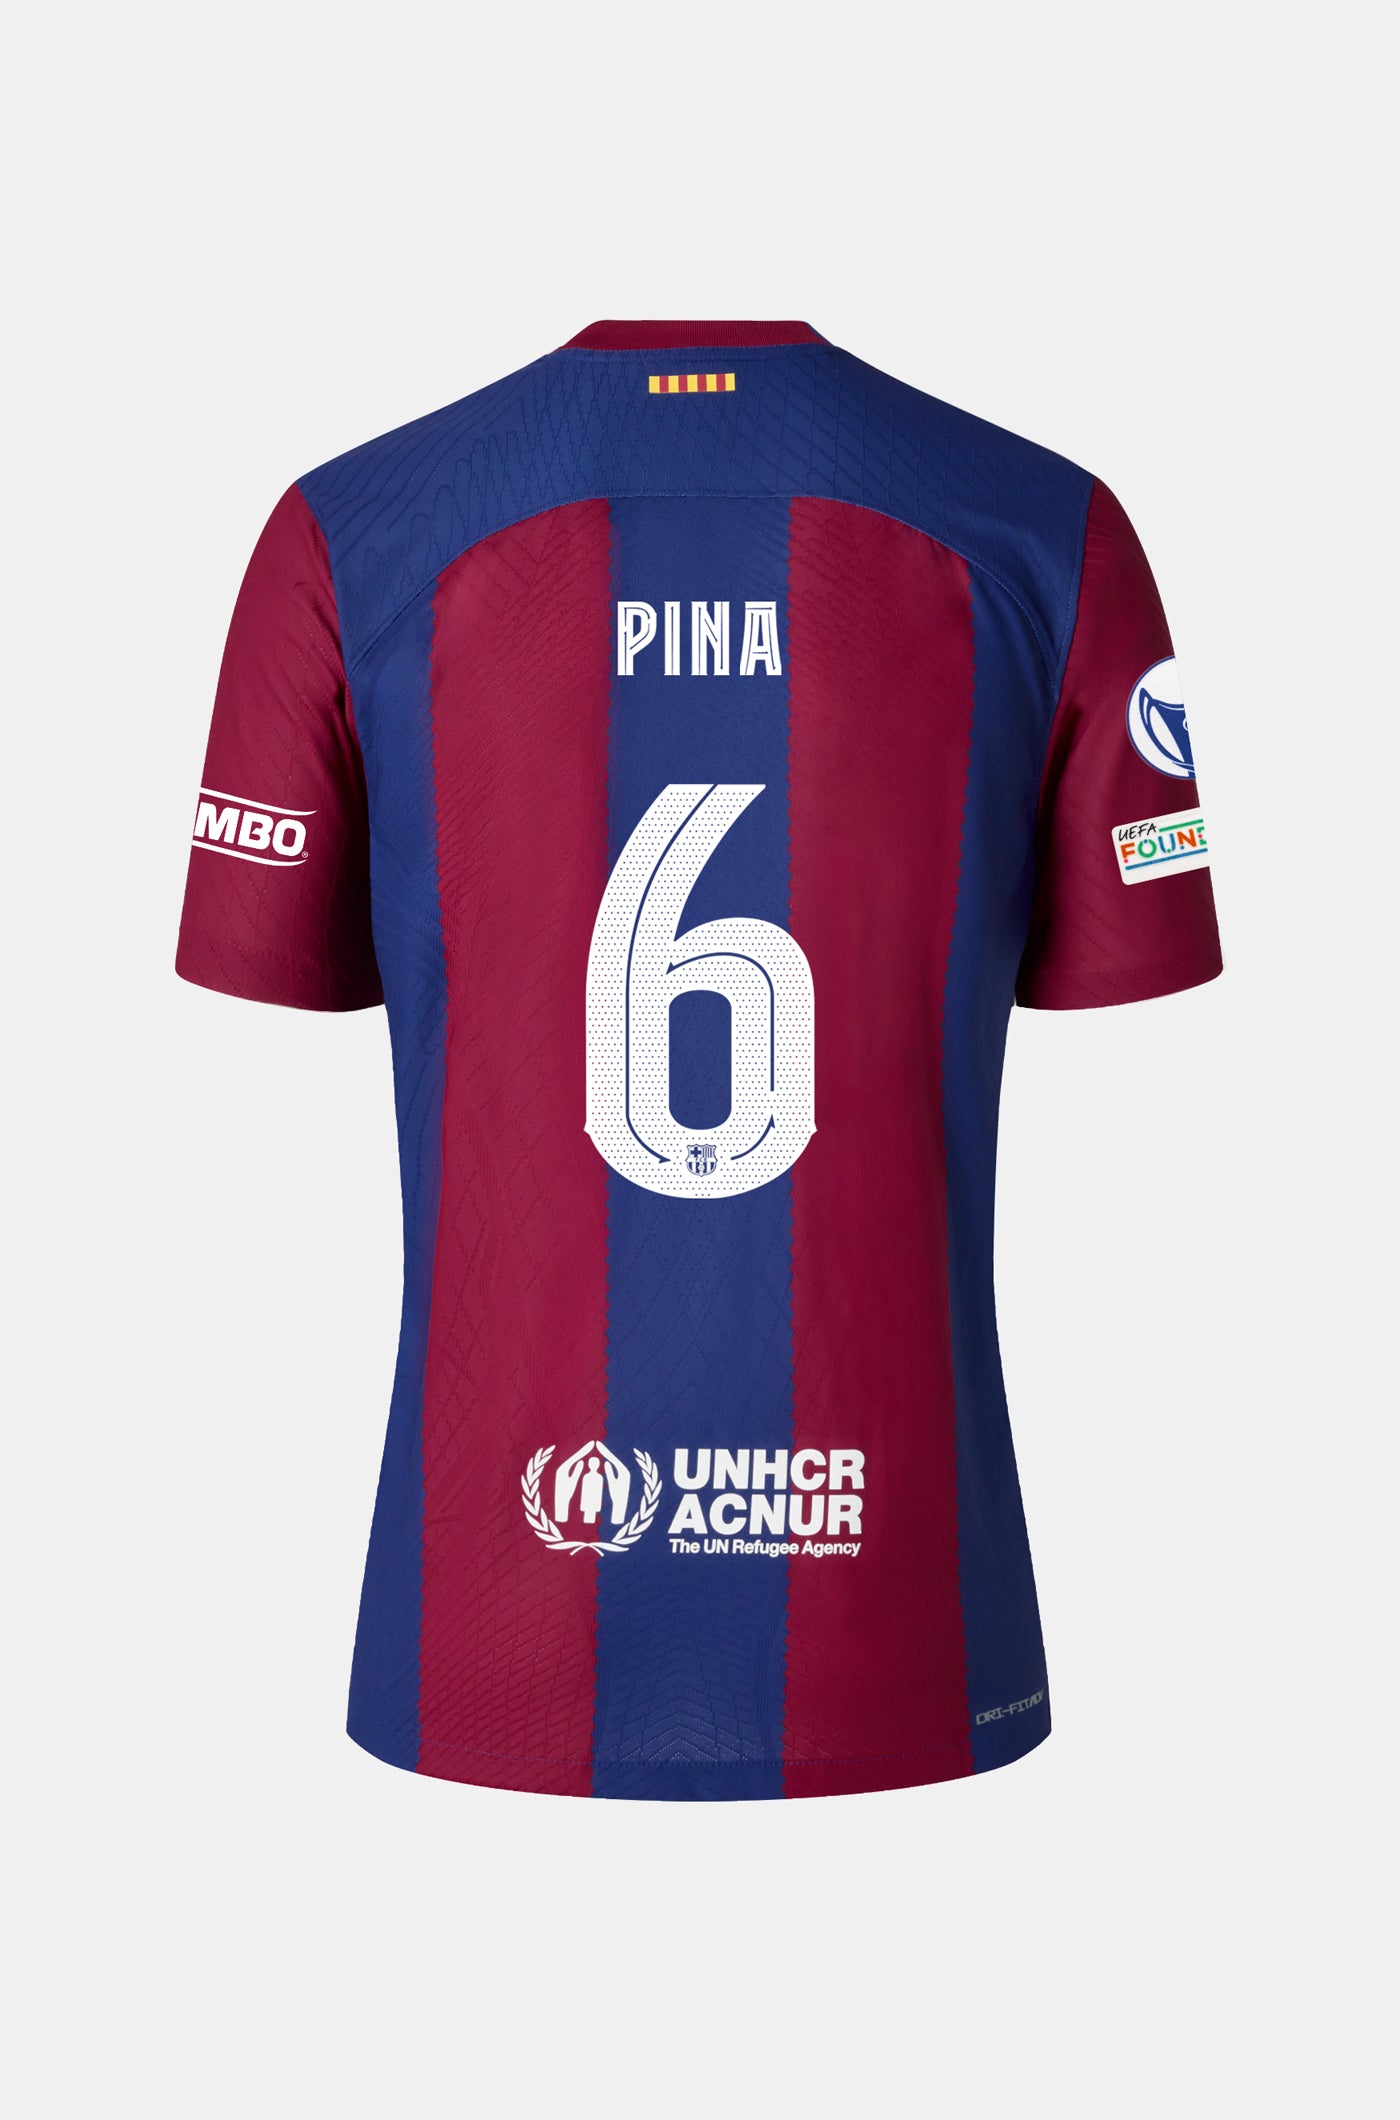 UWCL FC Barcelona home shirt 23/24 - Women - PINA